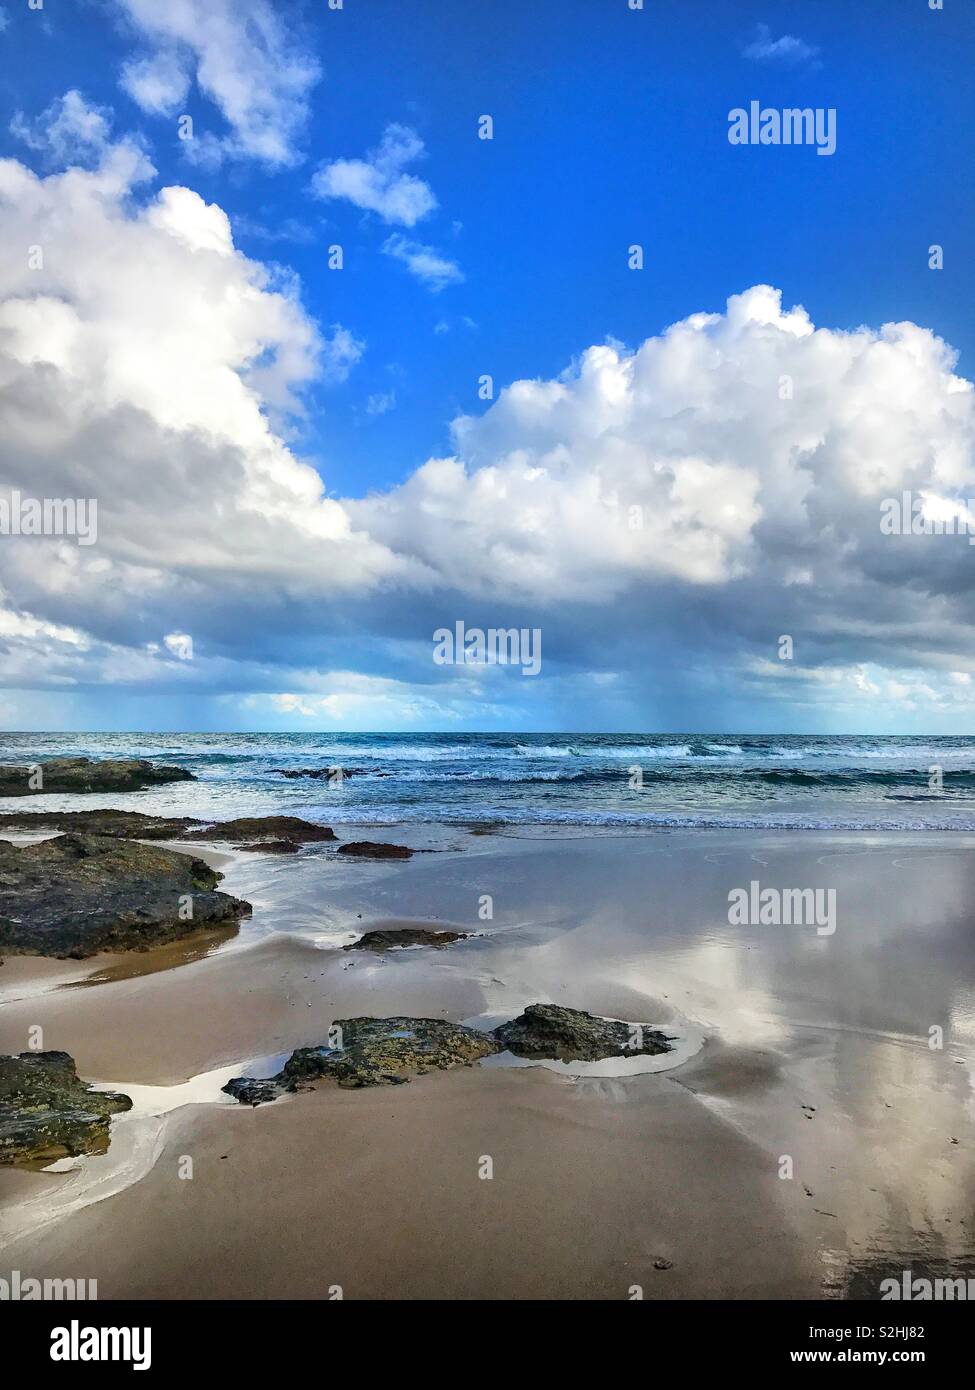 Australia Urunga beach summer ocean Pazifik water sand stone beautiful clouds shadow moment lights blue waves reflections Stock Photo